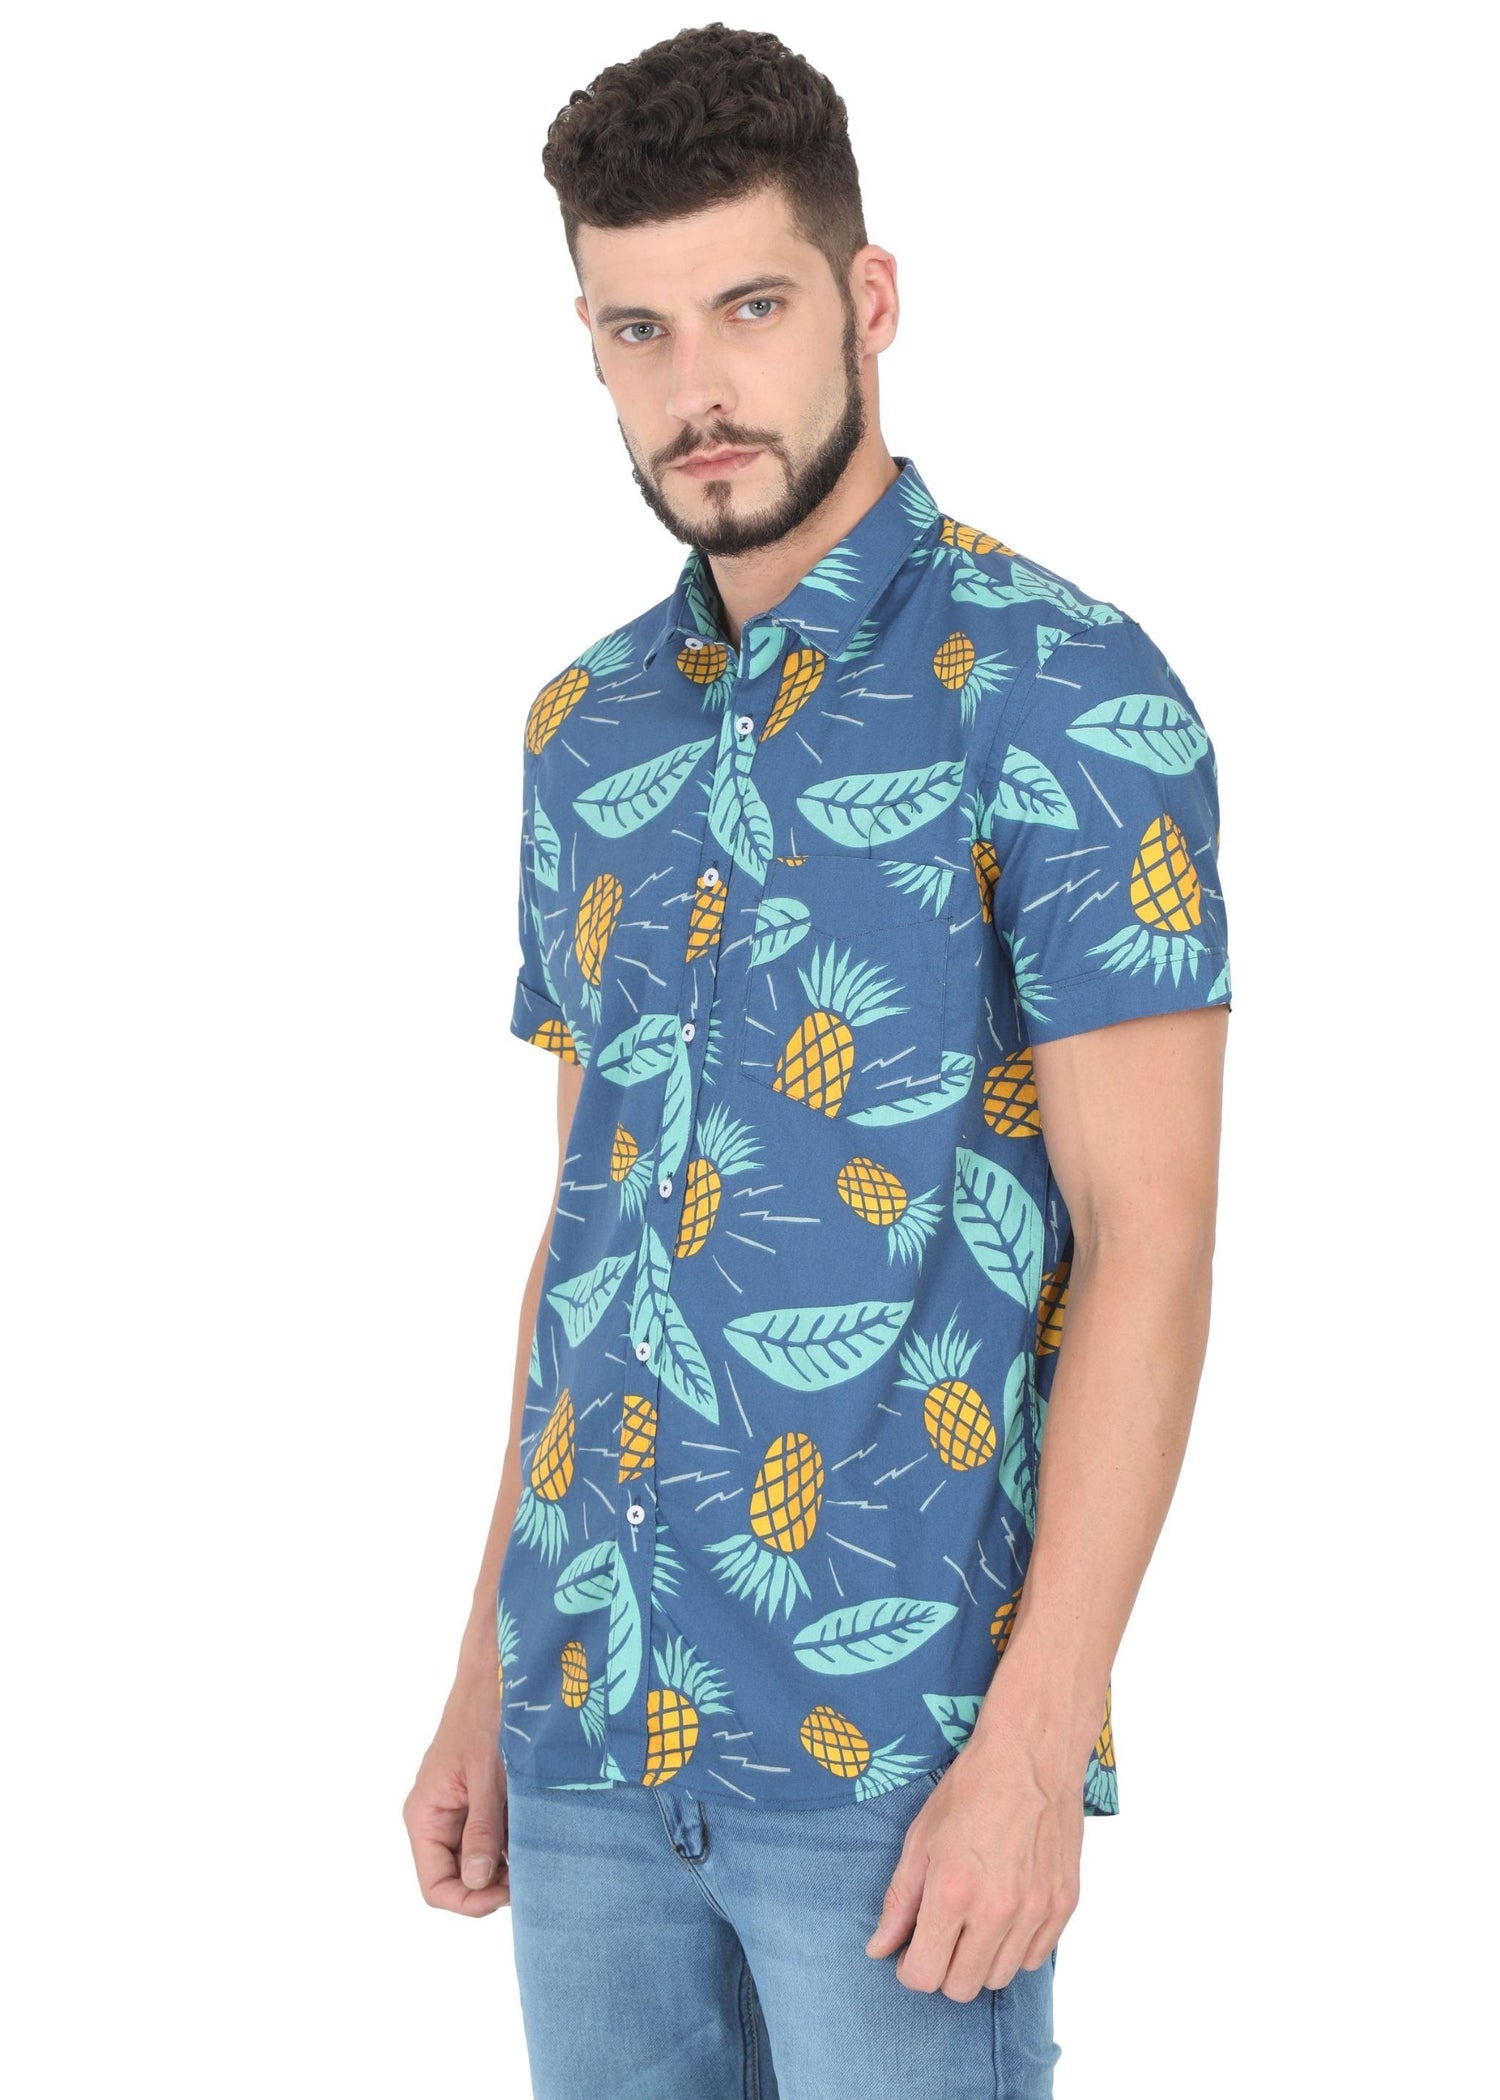 Tusok-blue-pineappleFeatured Shirt, Vacation-Printed Shirtimage-Blue Pineapple (2)